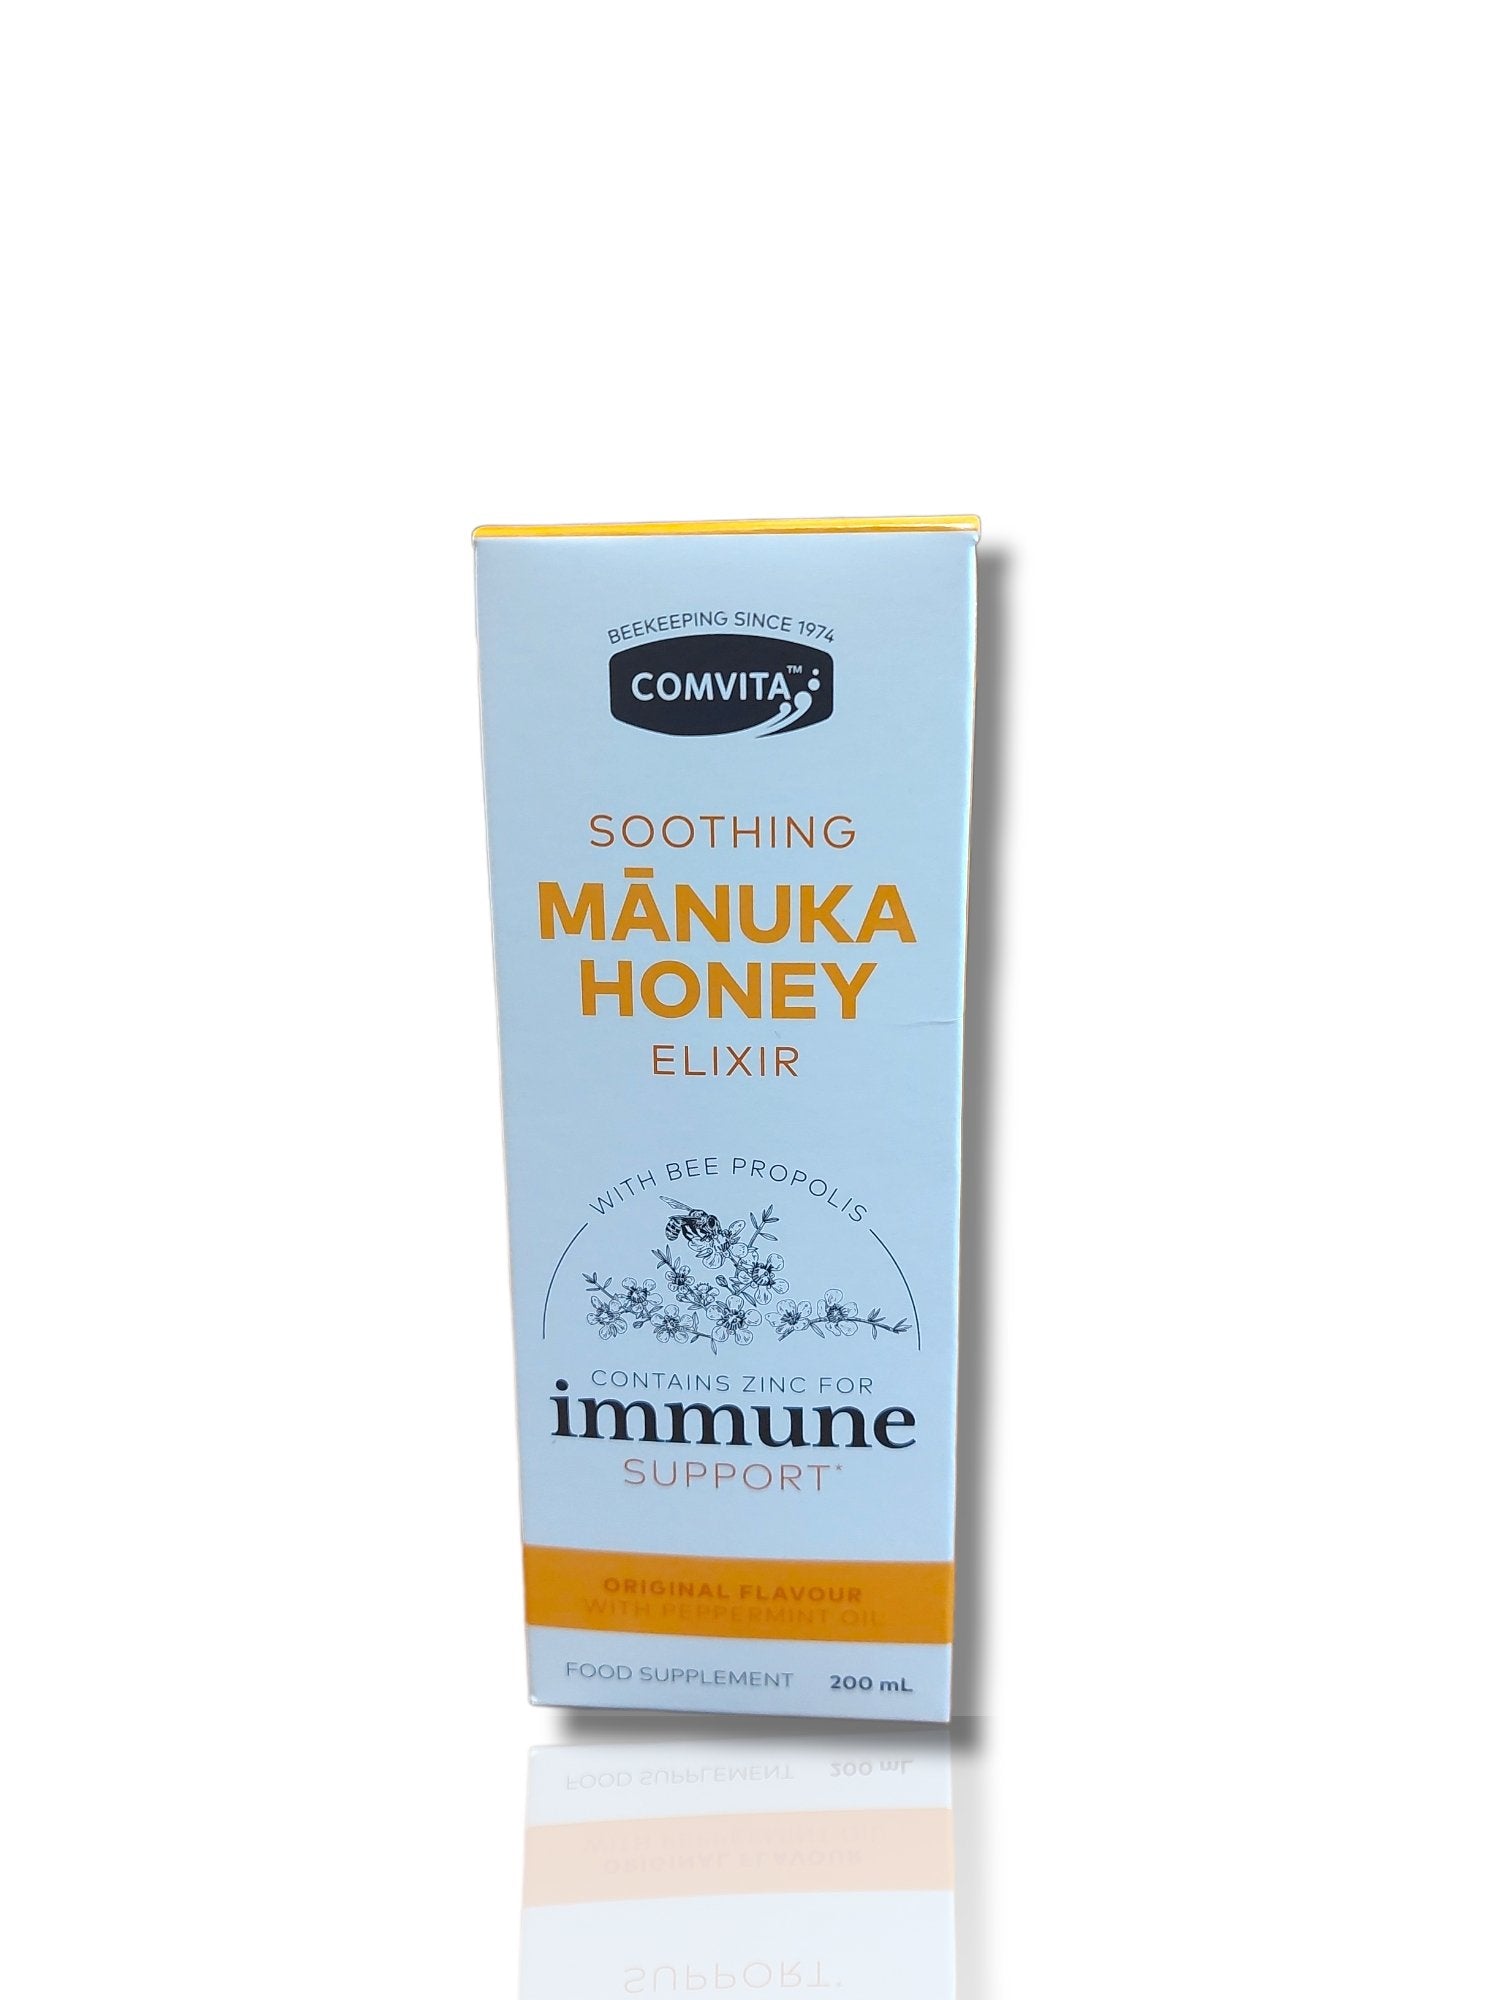 Comvita Manuka Honey and Propolis Elixir - HealthyLiving.ie